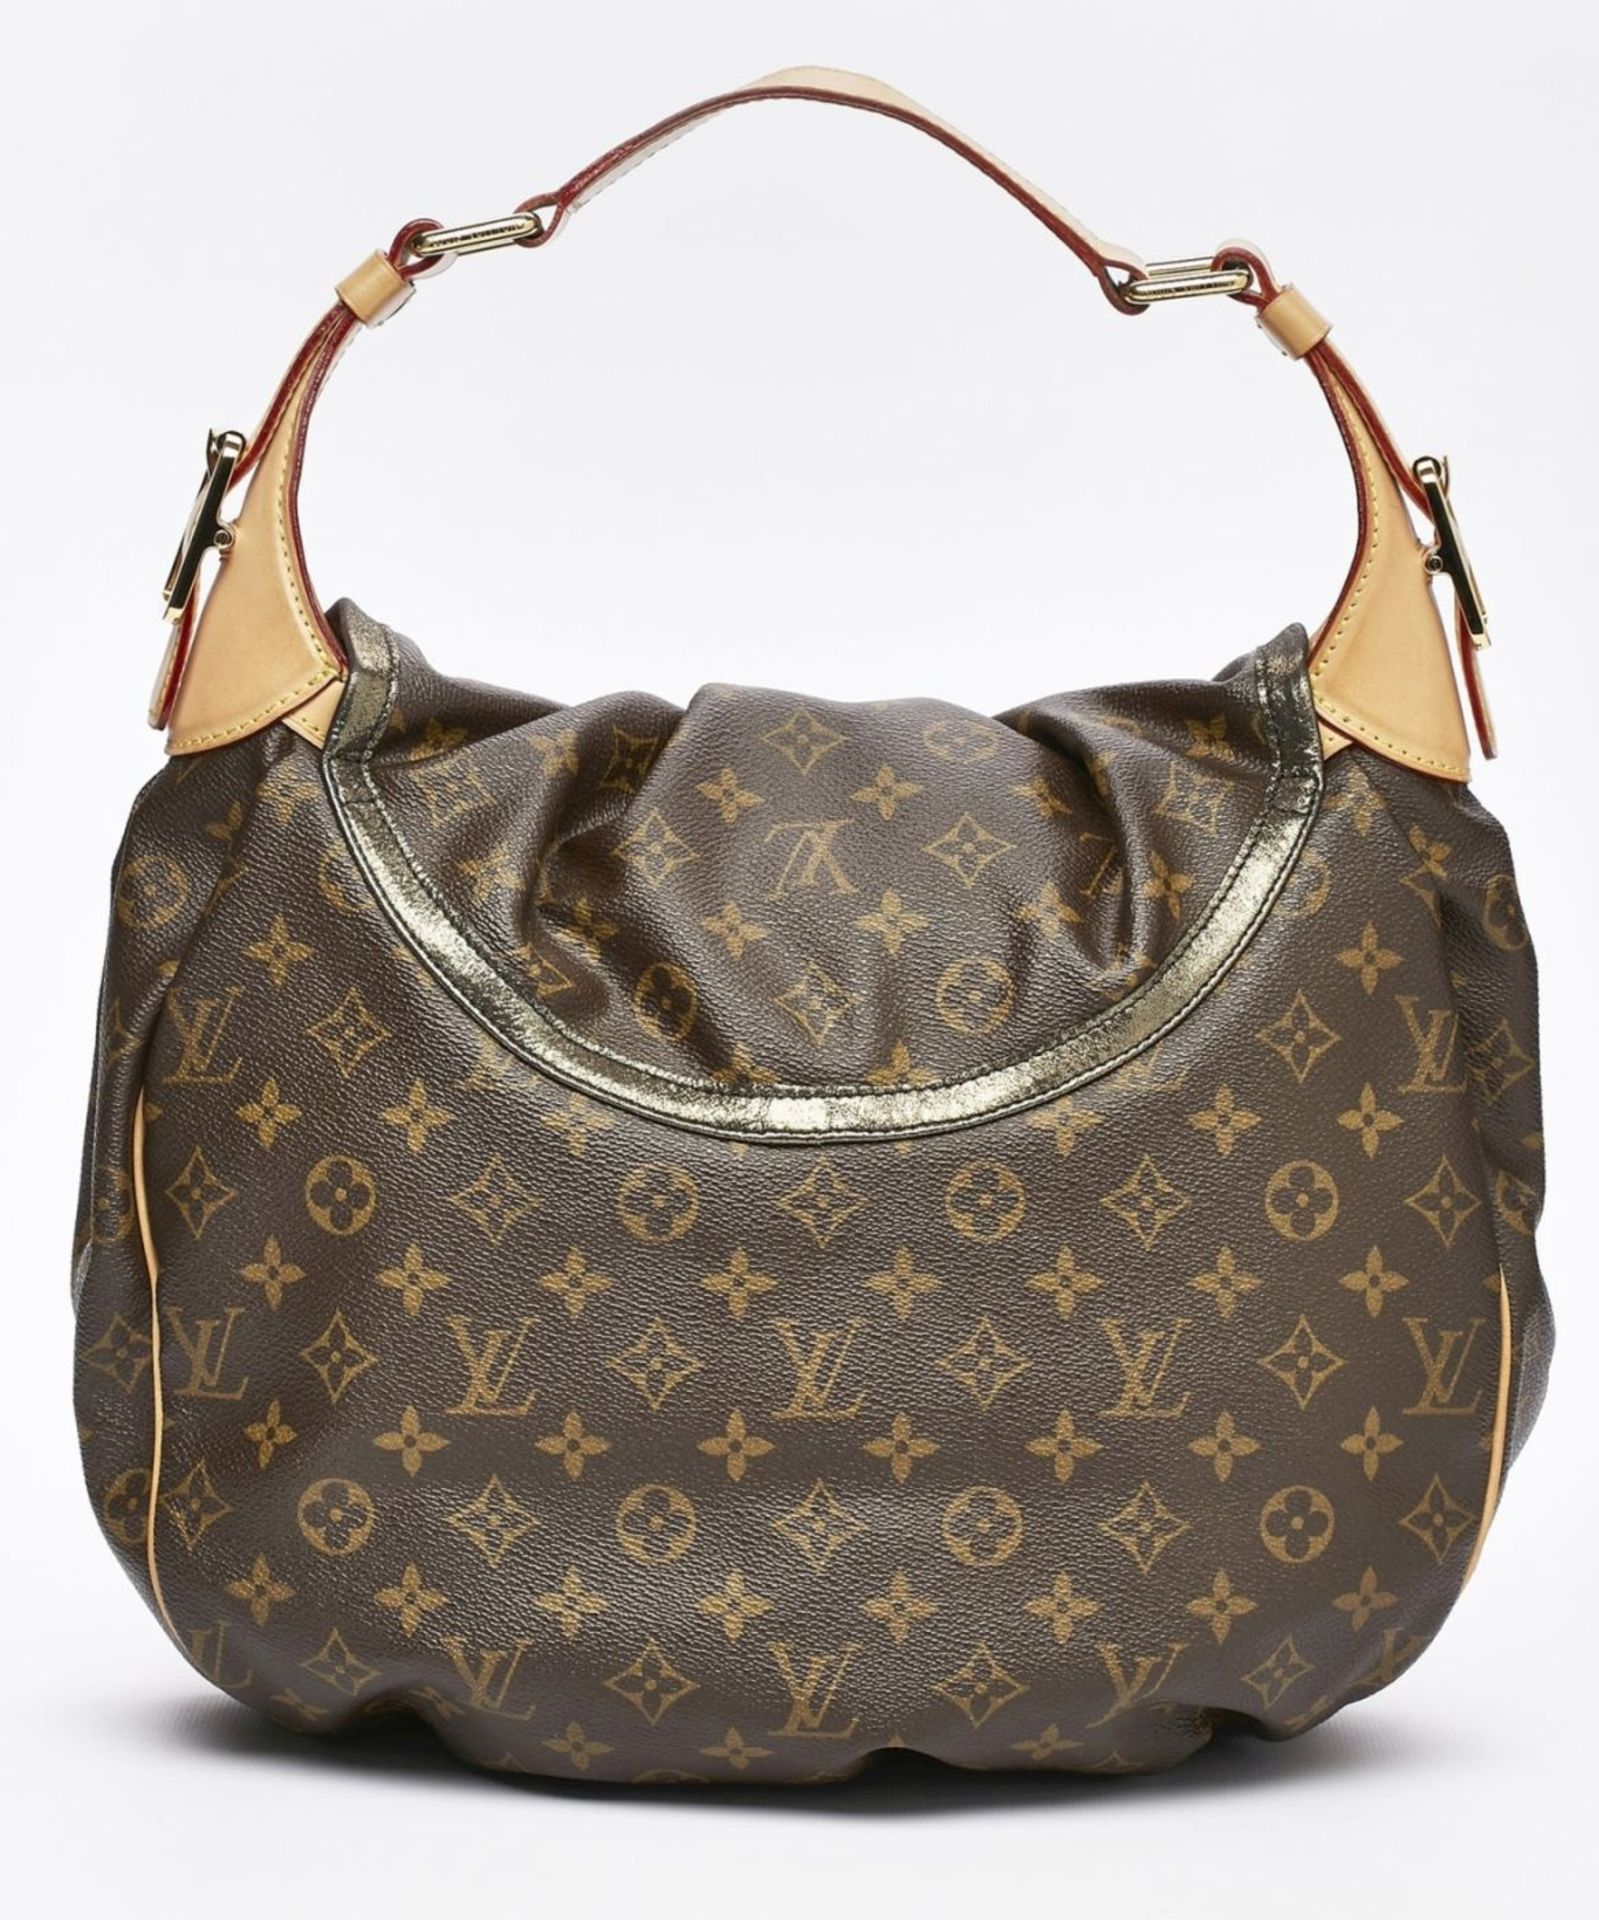 Handtasche "Kalahari GM", Louis Vuitton 2009. - Bild 2 aus 3